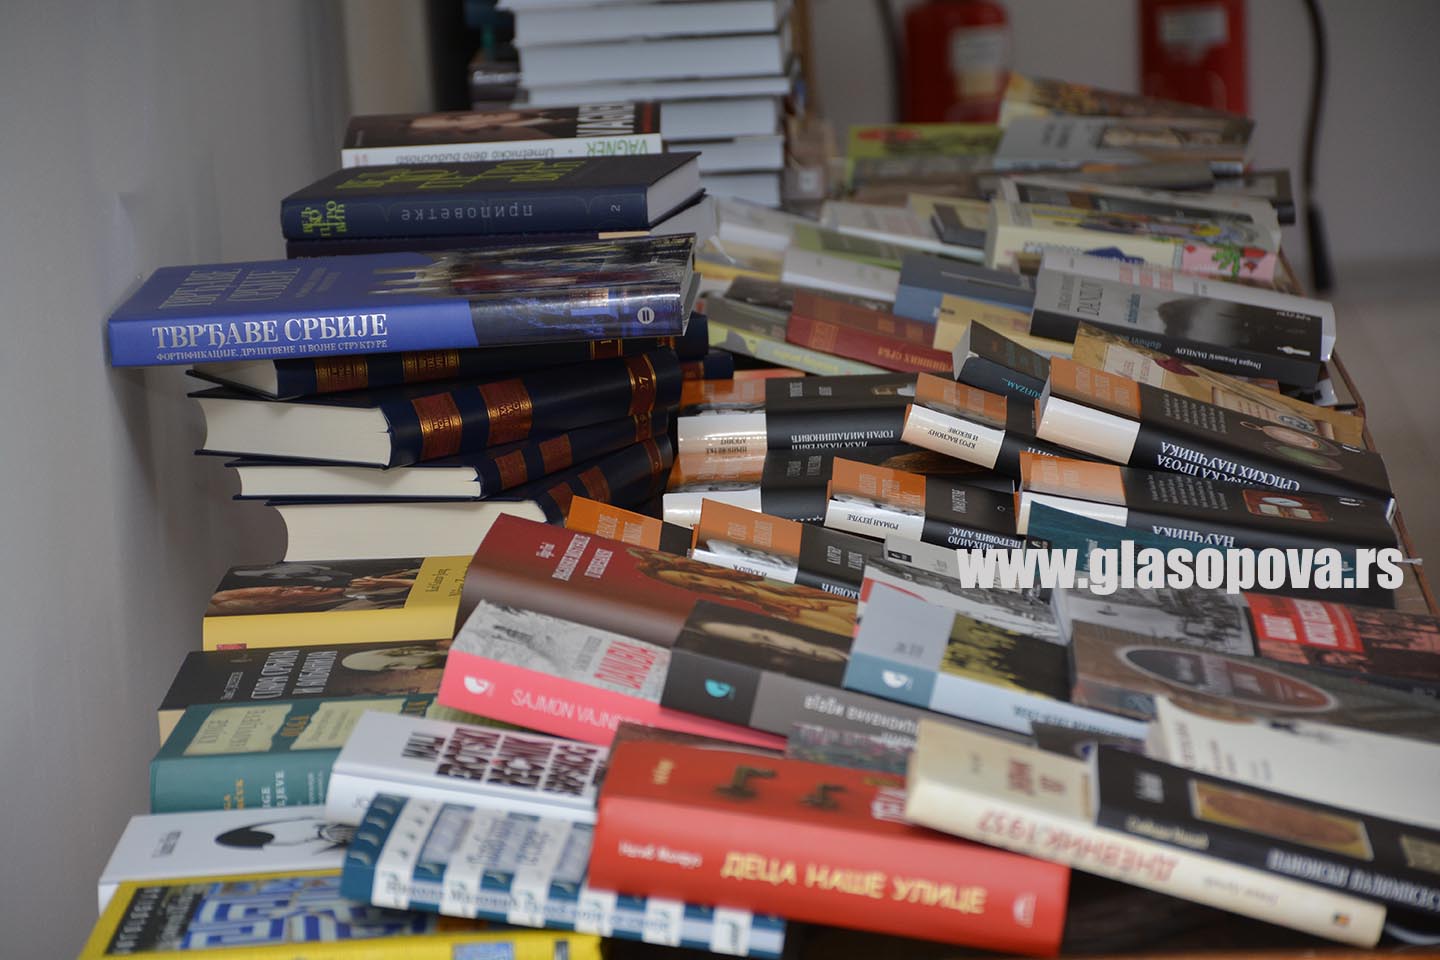 Opštinska narodna biblioteka Opovo: Radno vreme biblioteke i ogranaka tokom leta